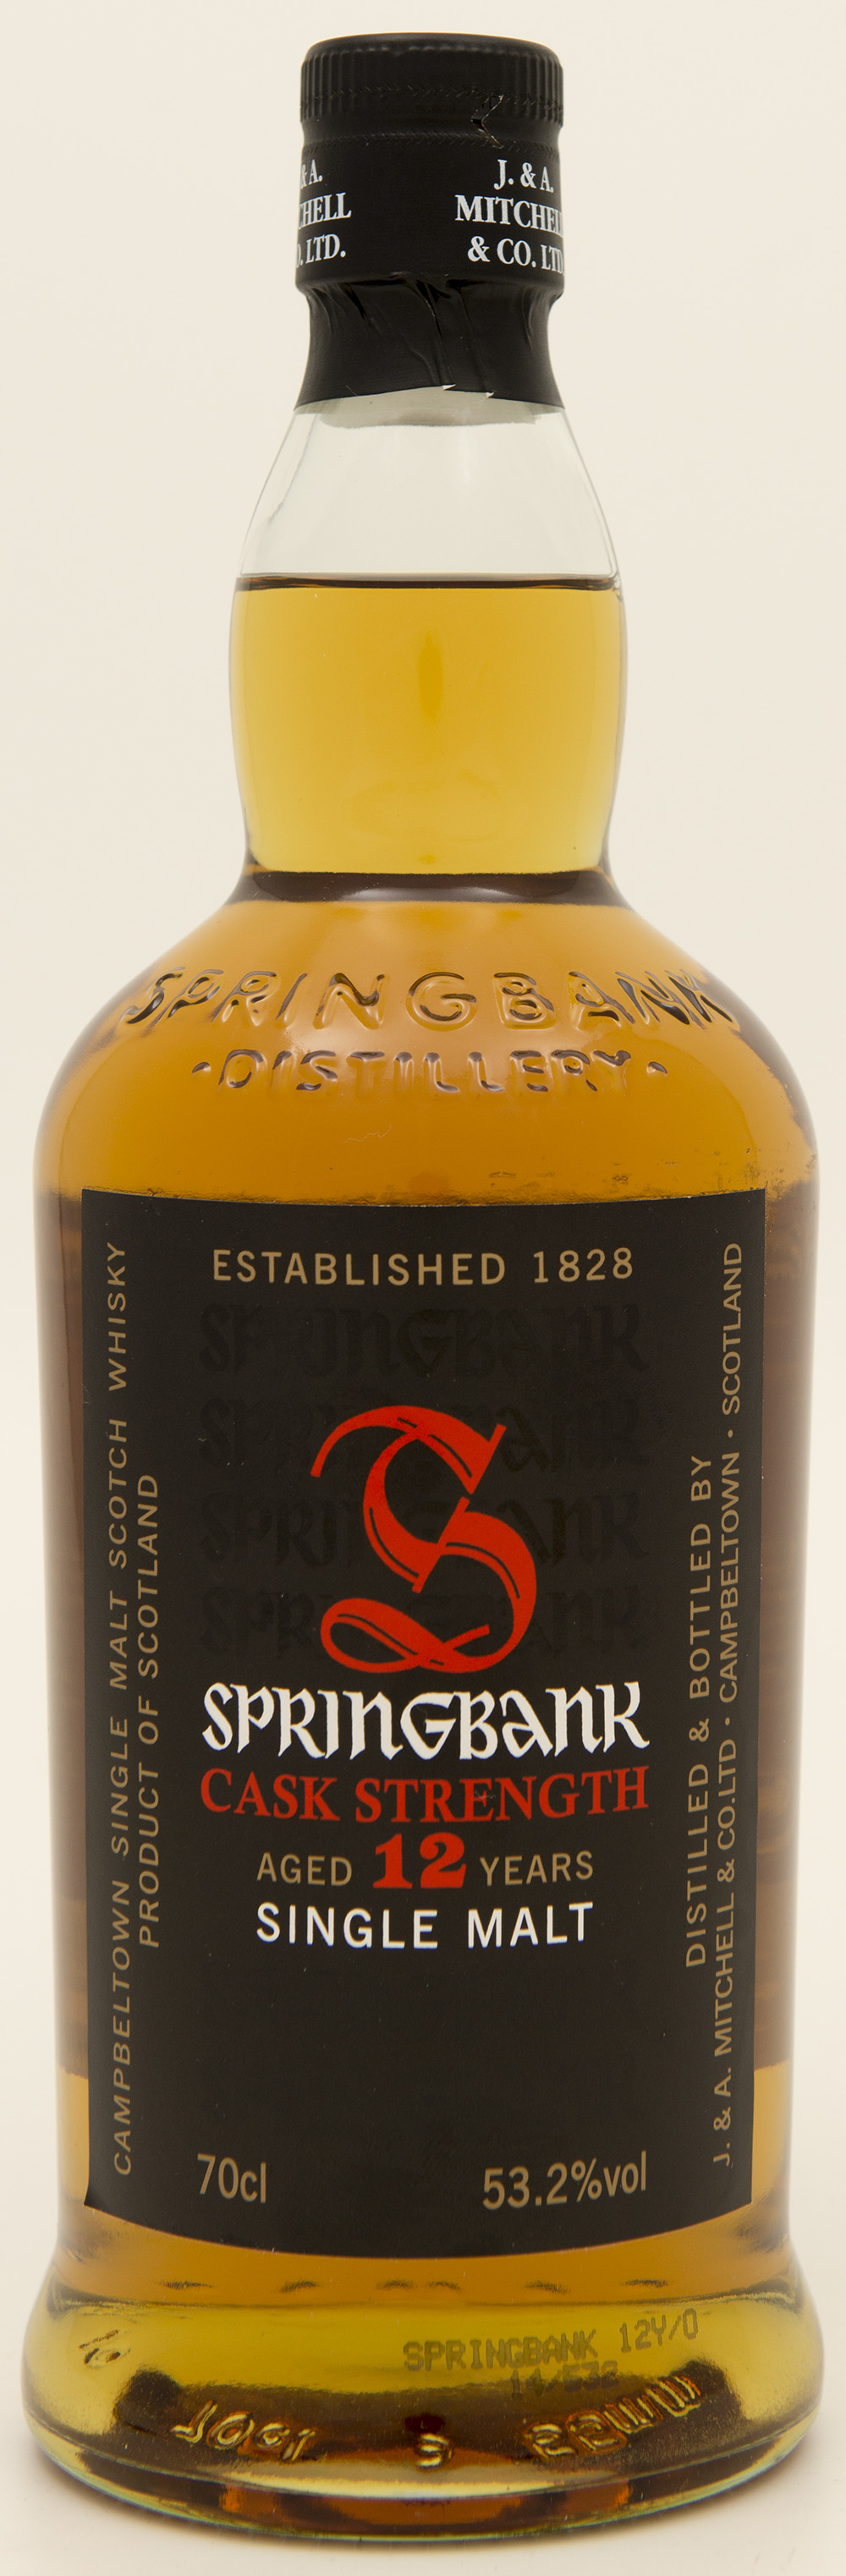 Billede: DSC_1392 - Springbank 12 cask strength - bottle front.jpg